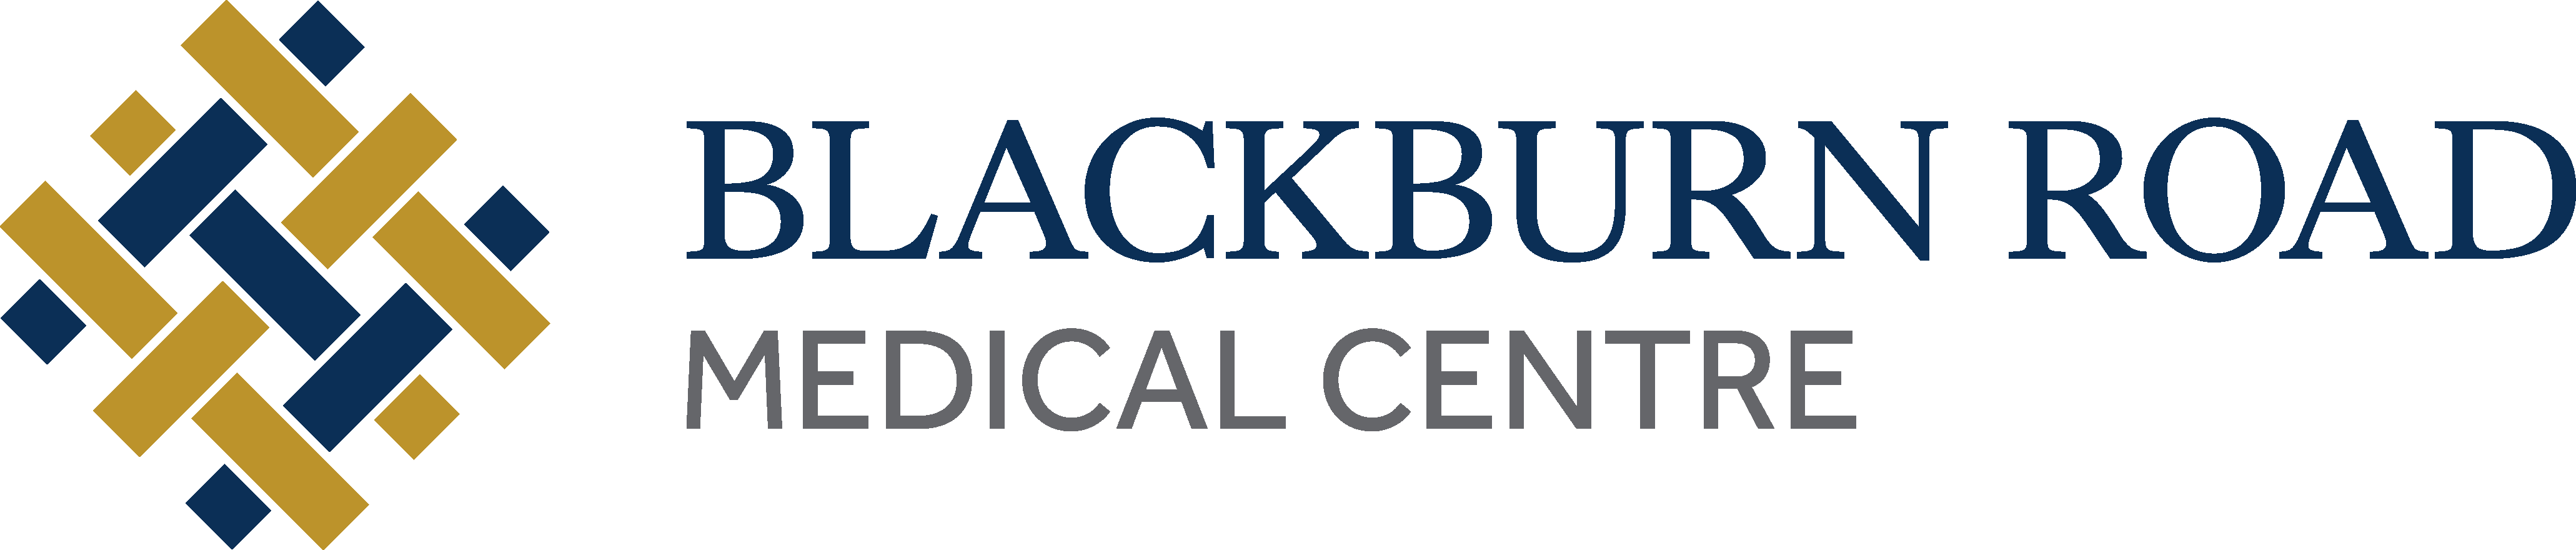 Blackburn Road Medical Centre